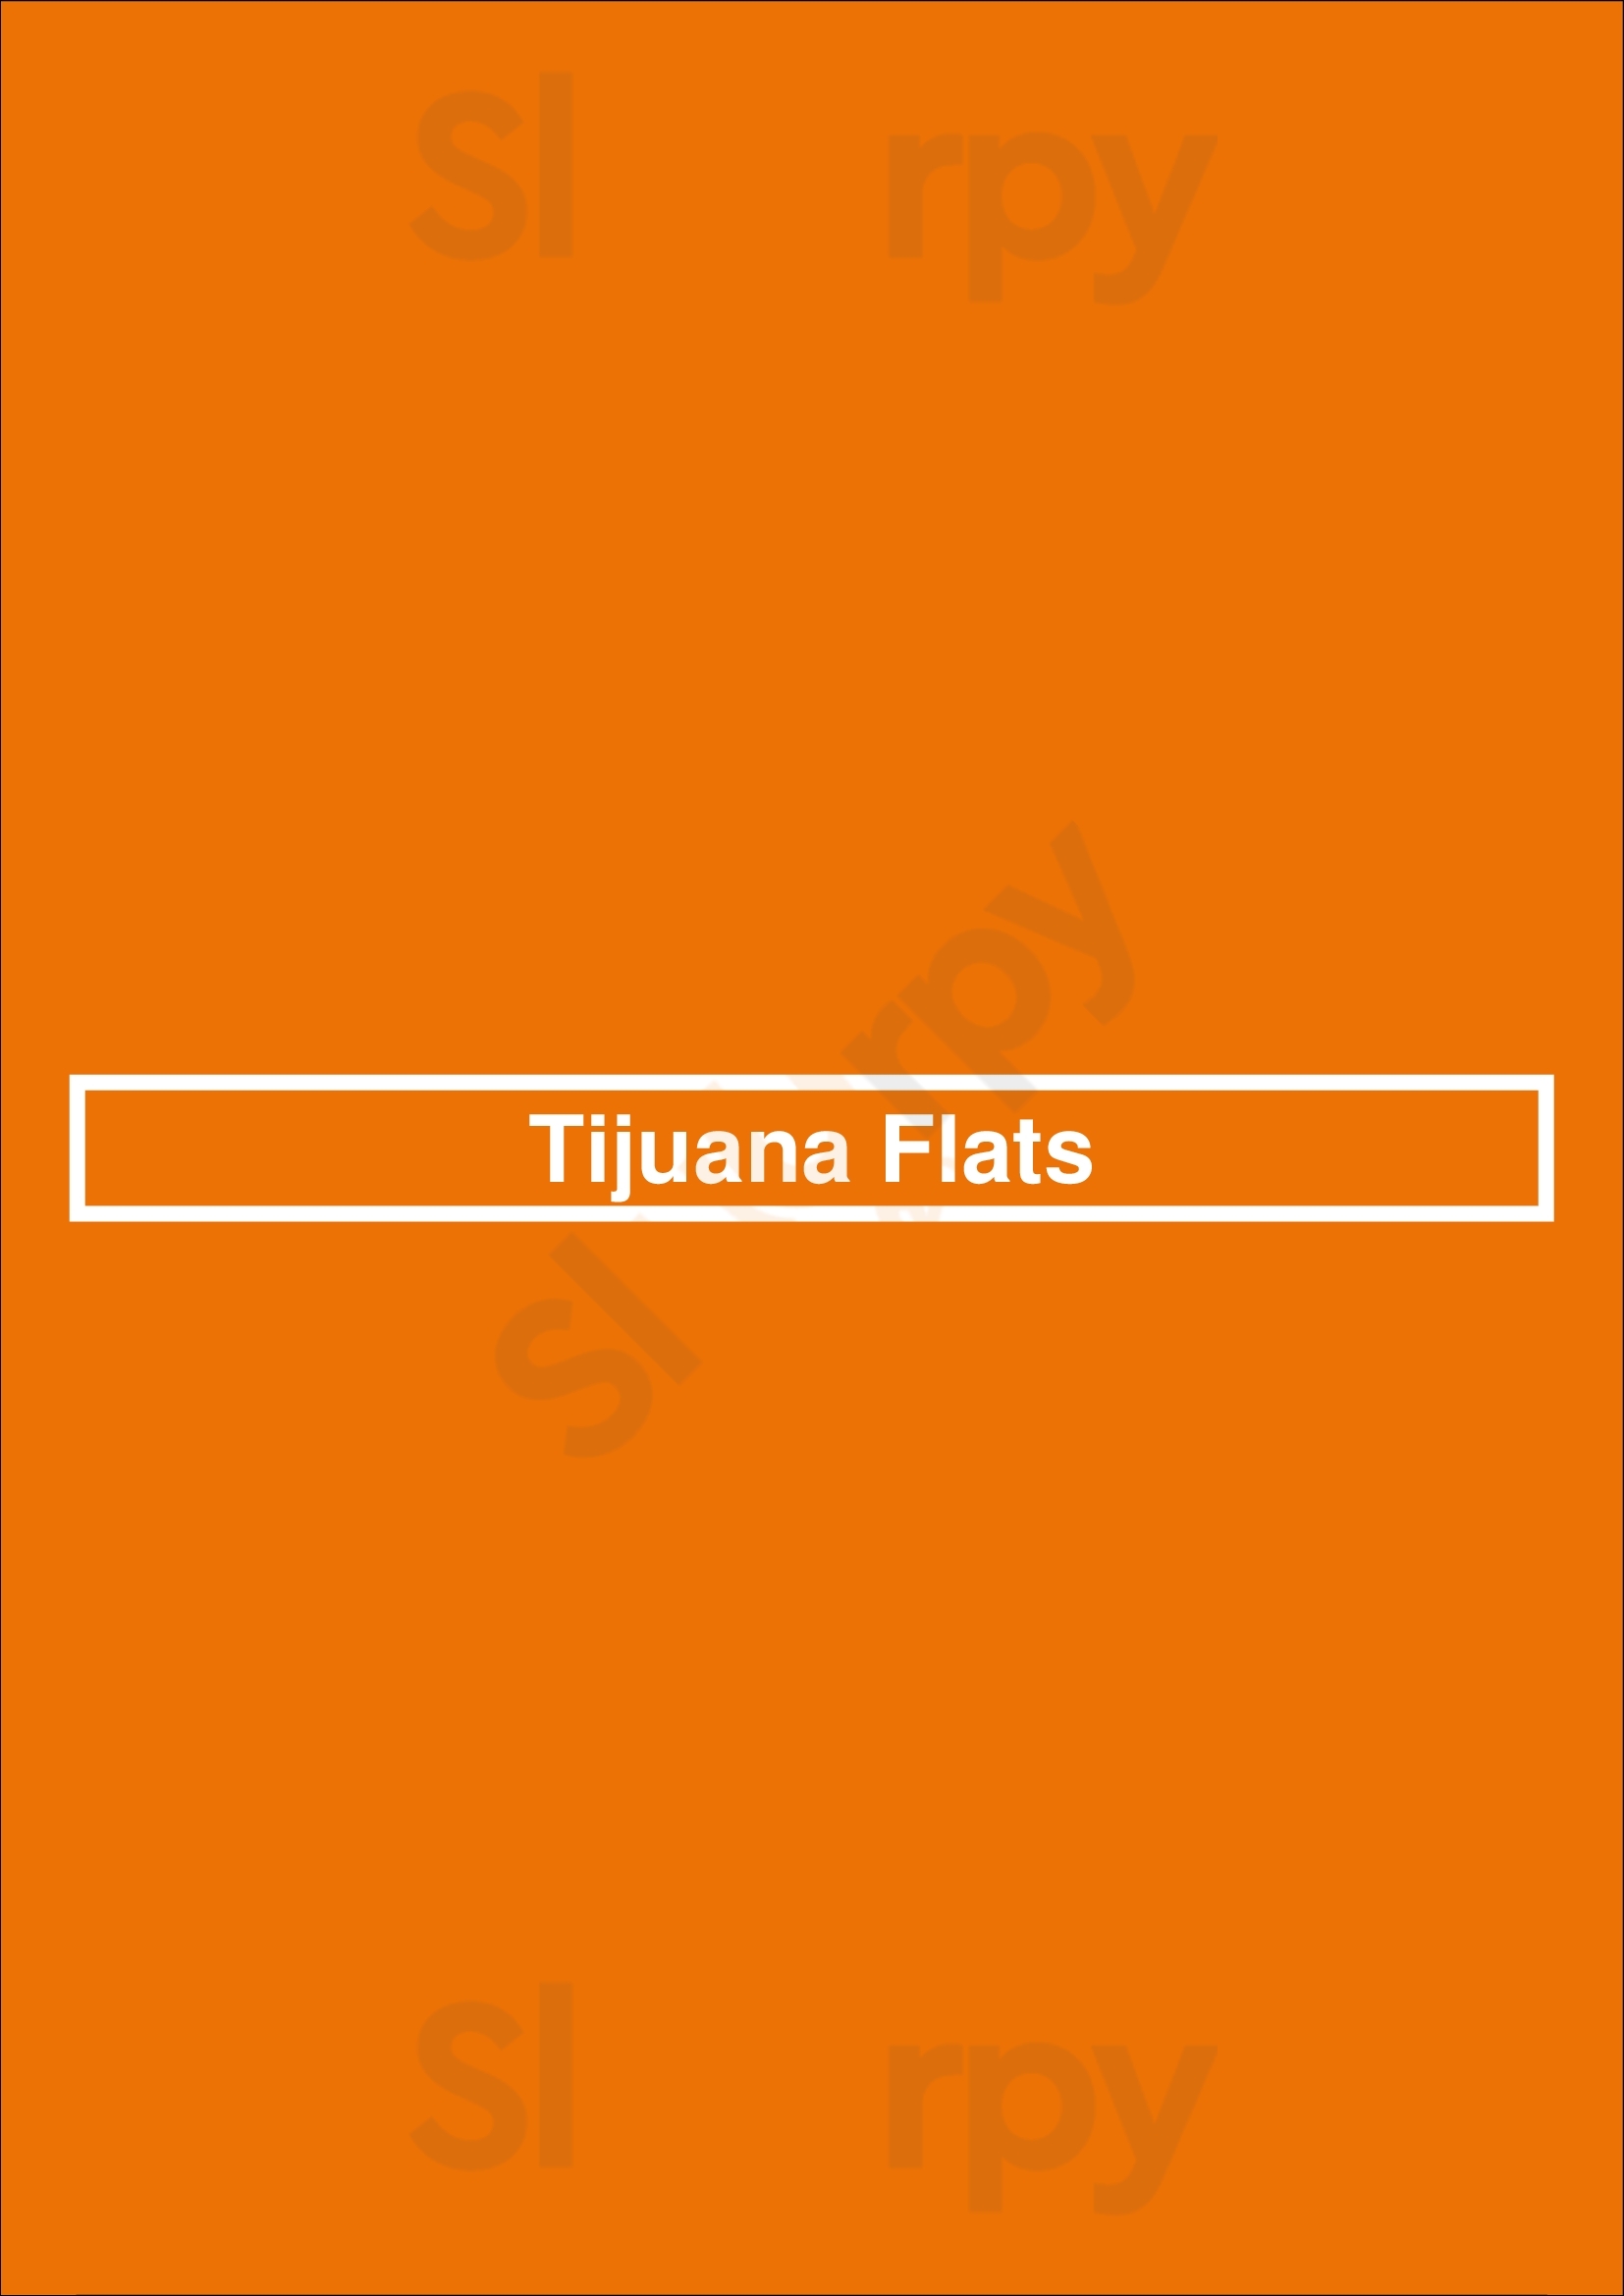 Tijuana Flats Orlando Menu - 1